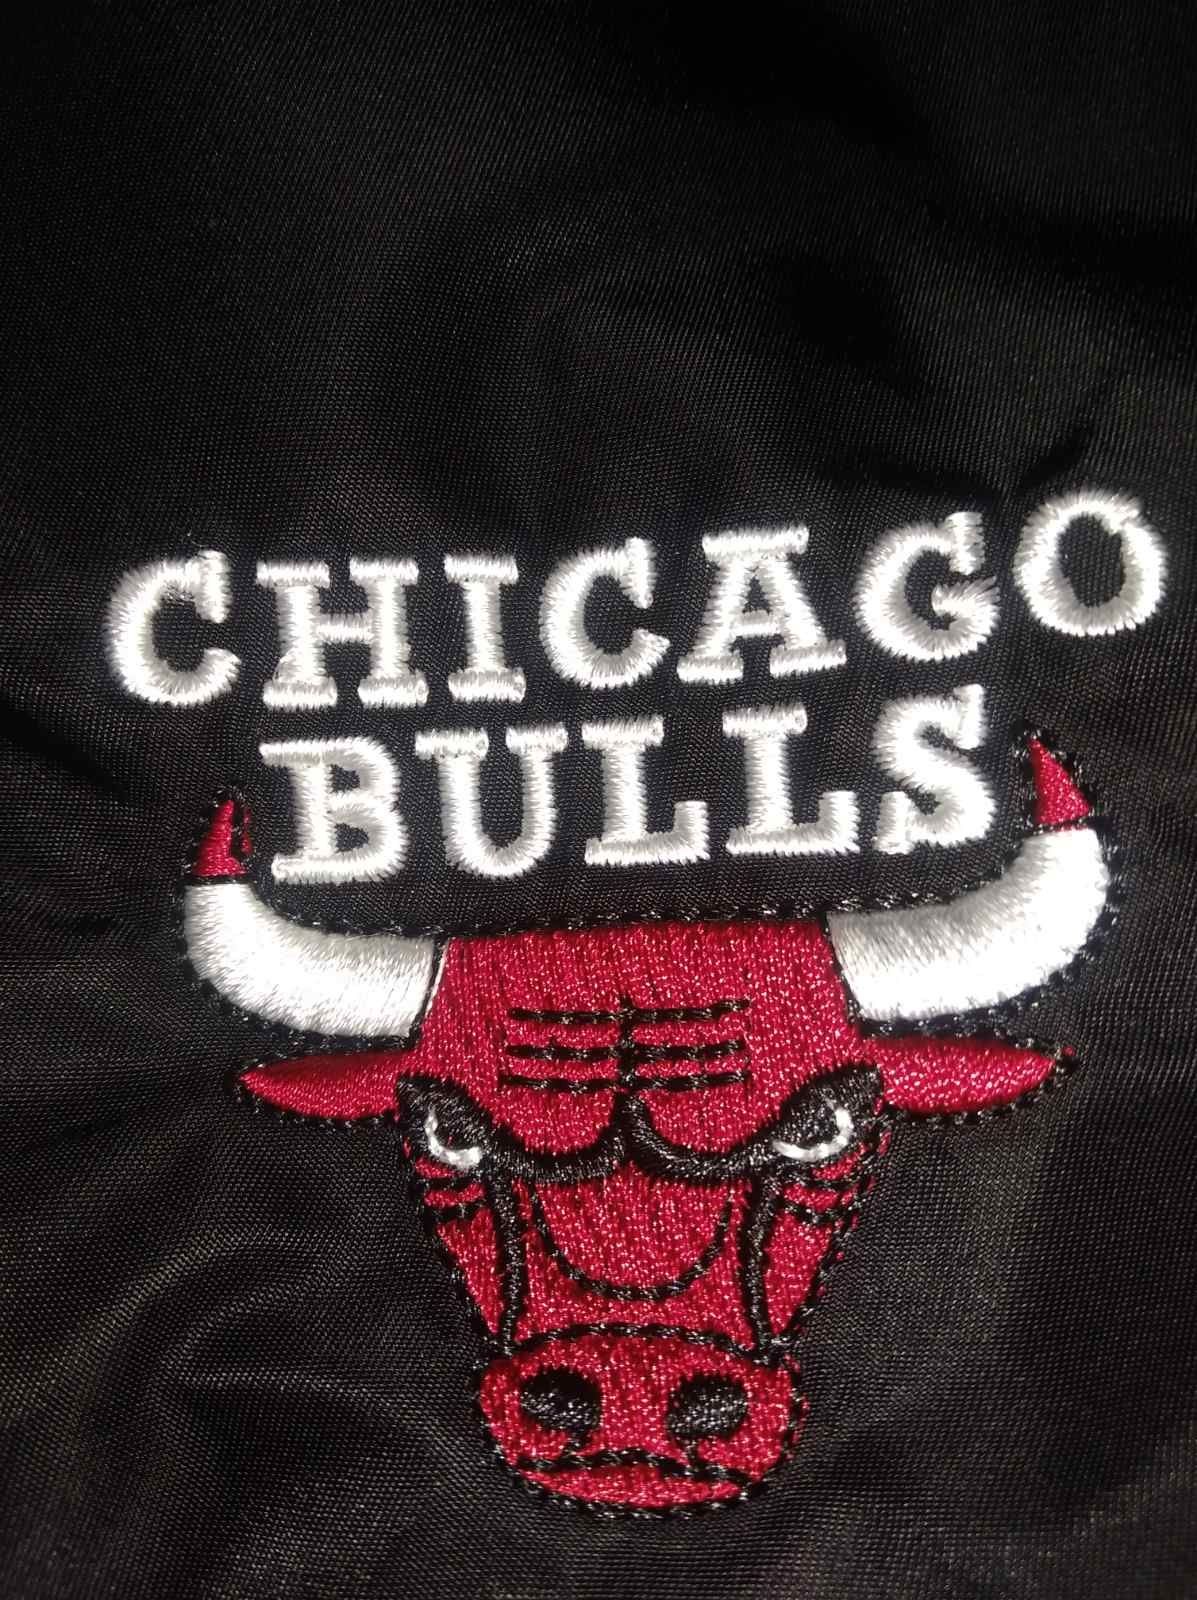 Бомбер Chicago Bulls x NBA